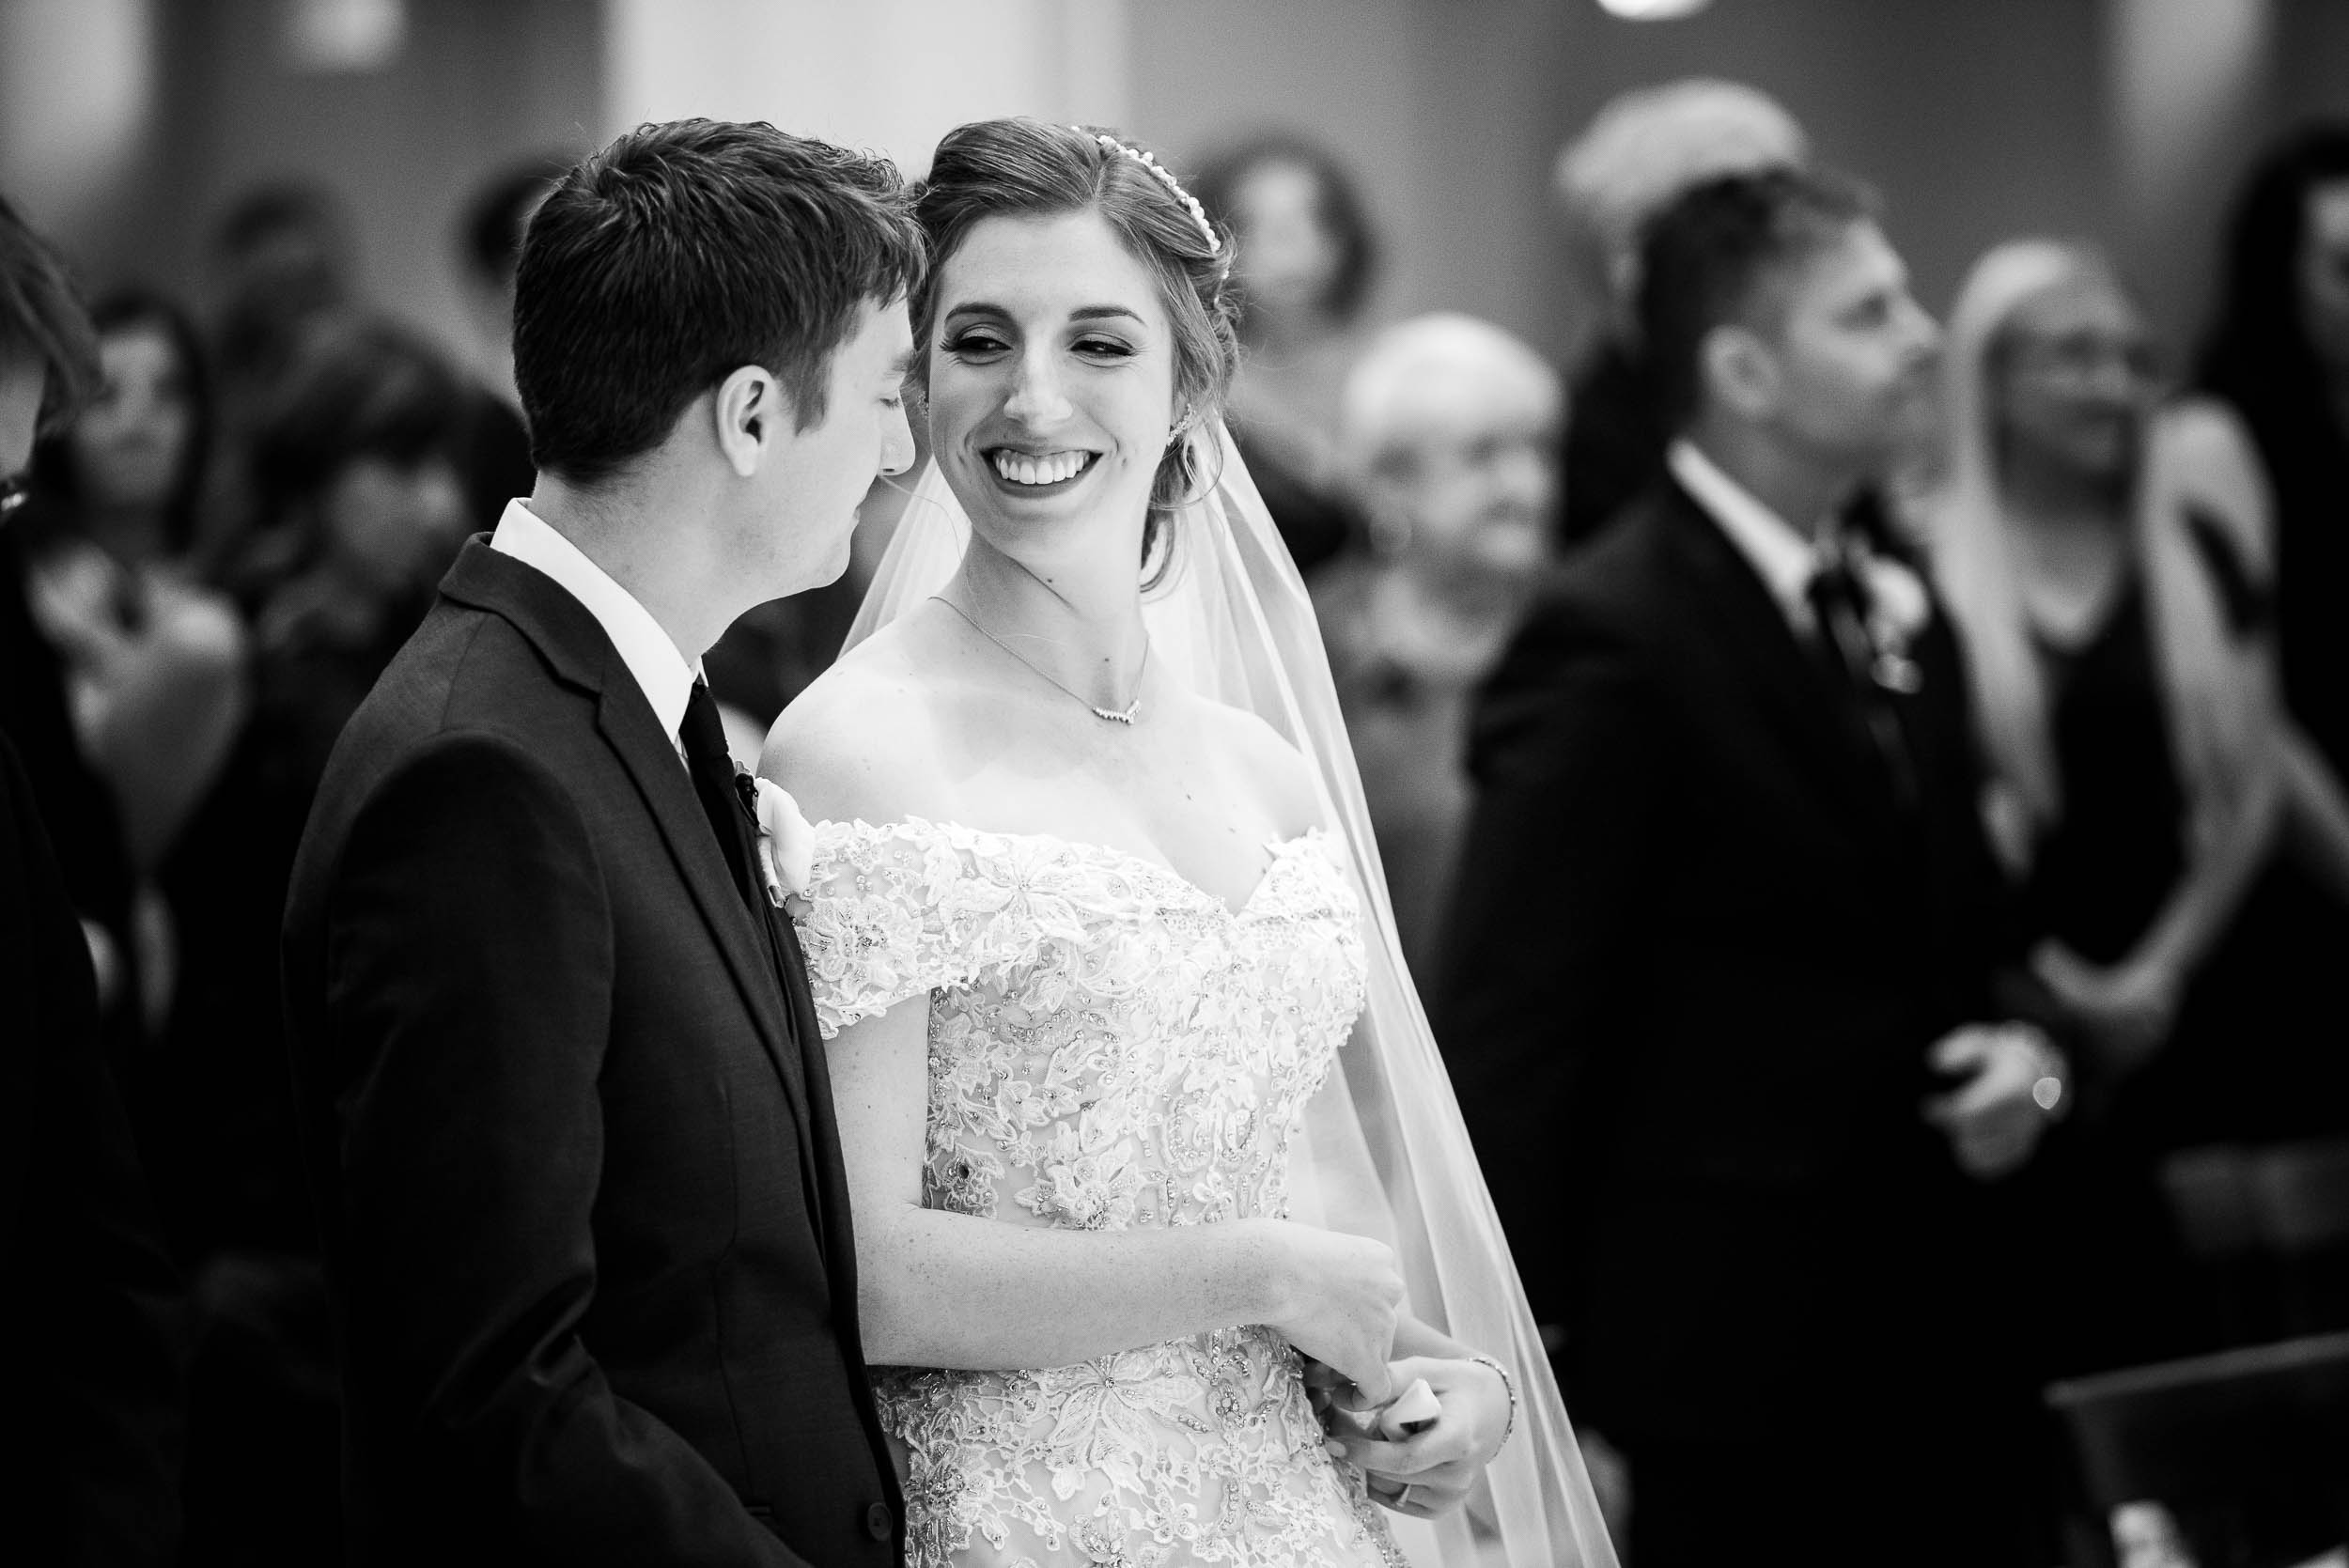 Brides gazes toward her groom during a wedding ceremony at Madonna Della Strada.